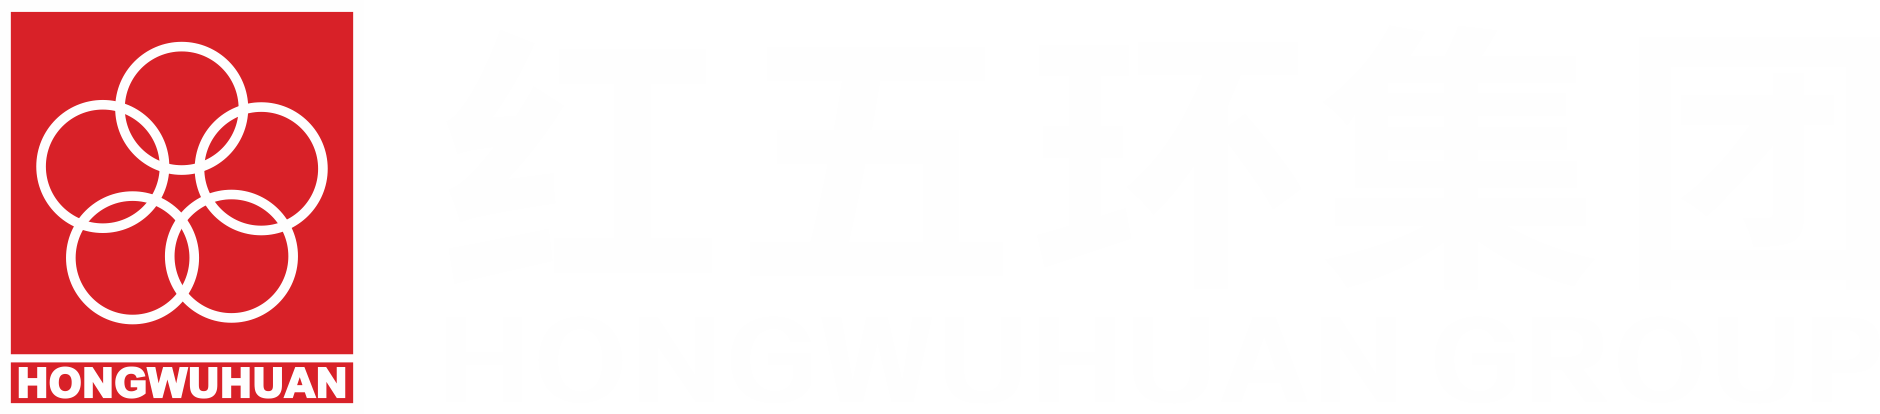 红五环集团logo.png